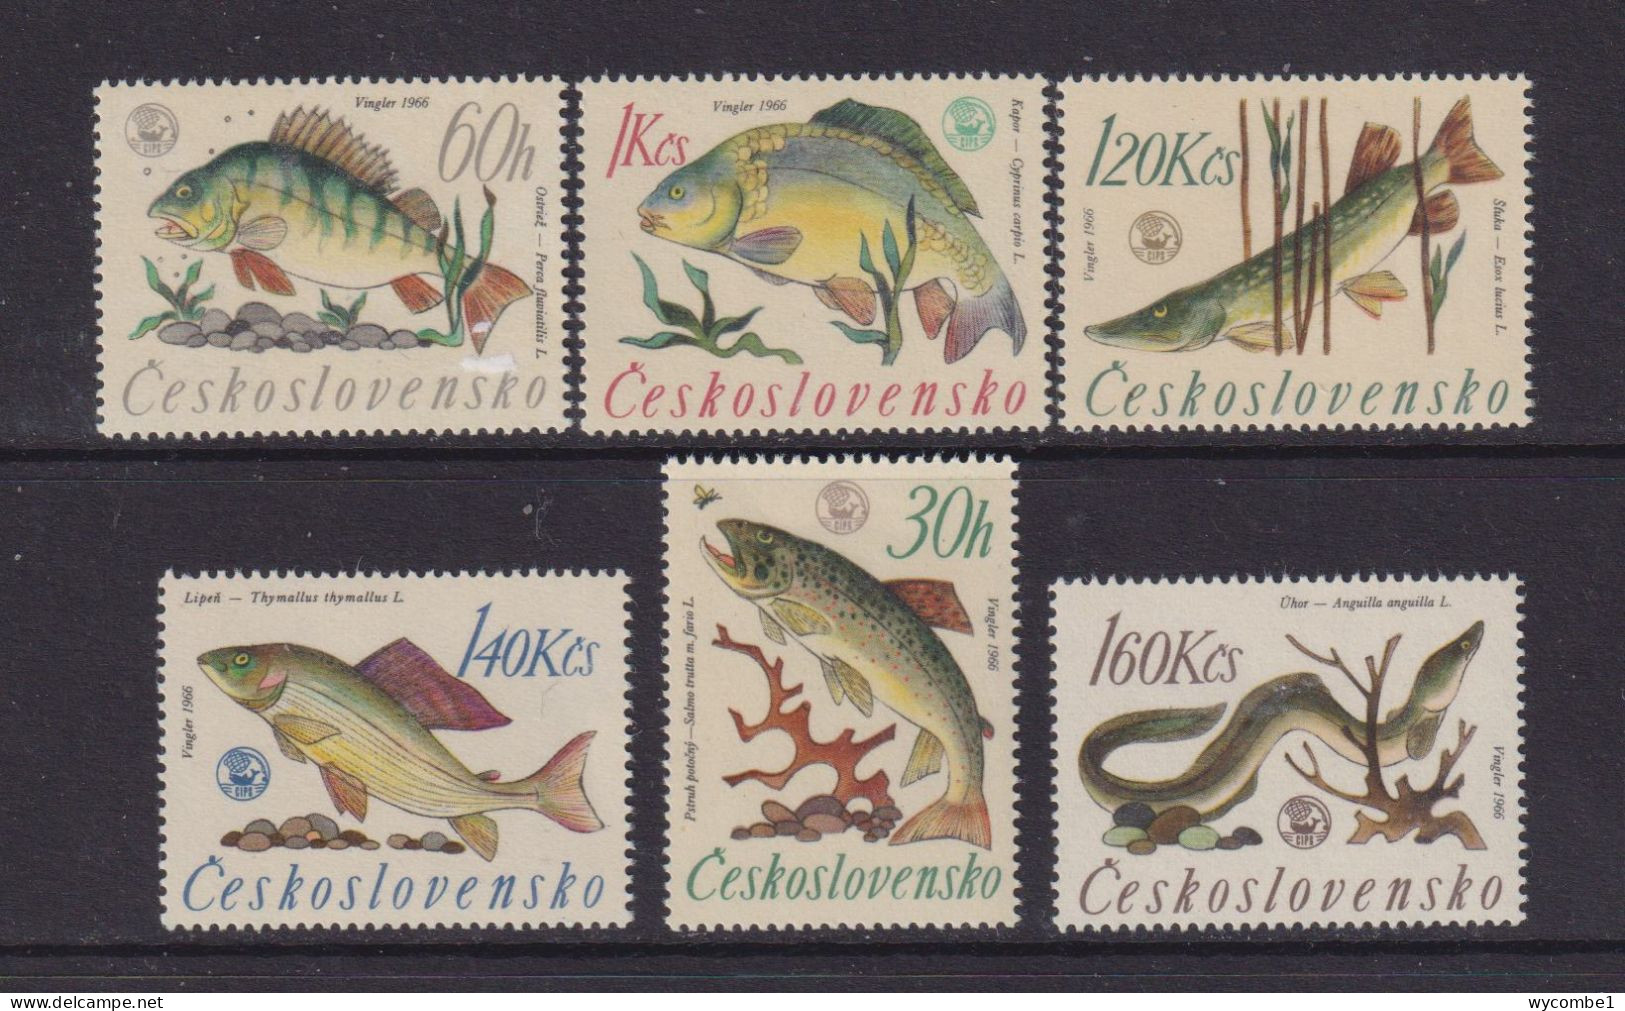 CZECHOSLOVAKIA  - 1966 Fish Set Never Hinged Mint - Ongebruikt